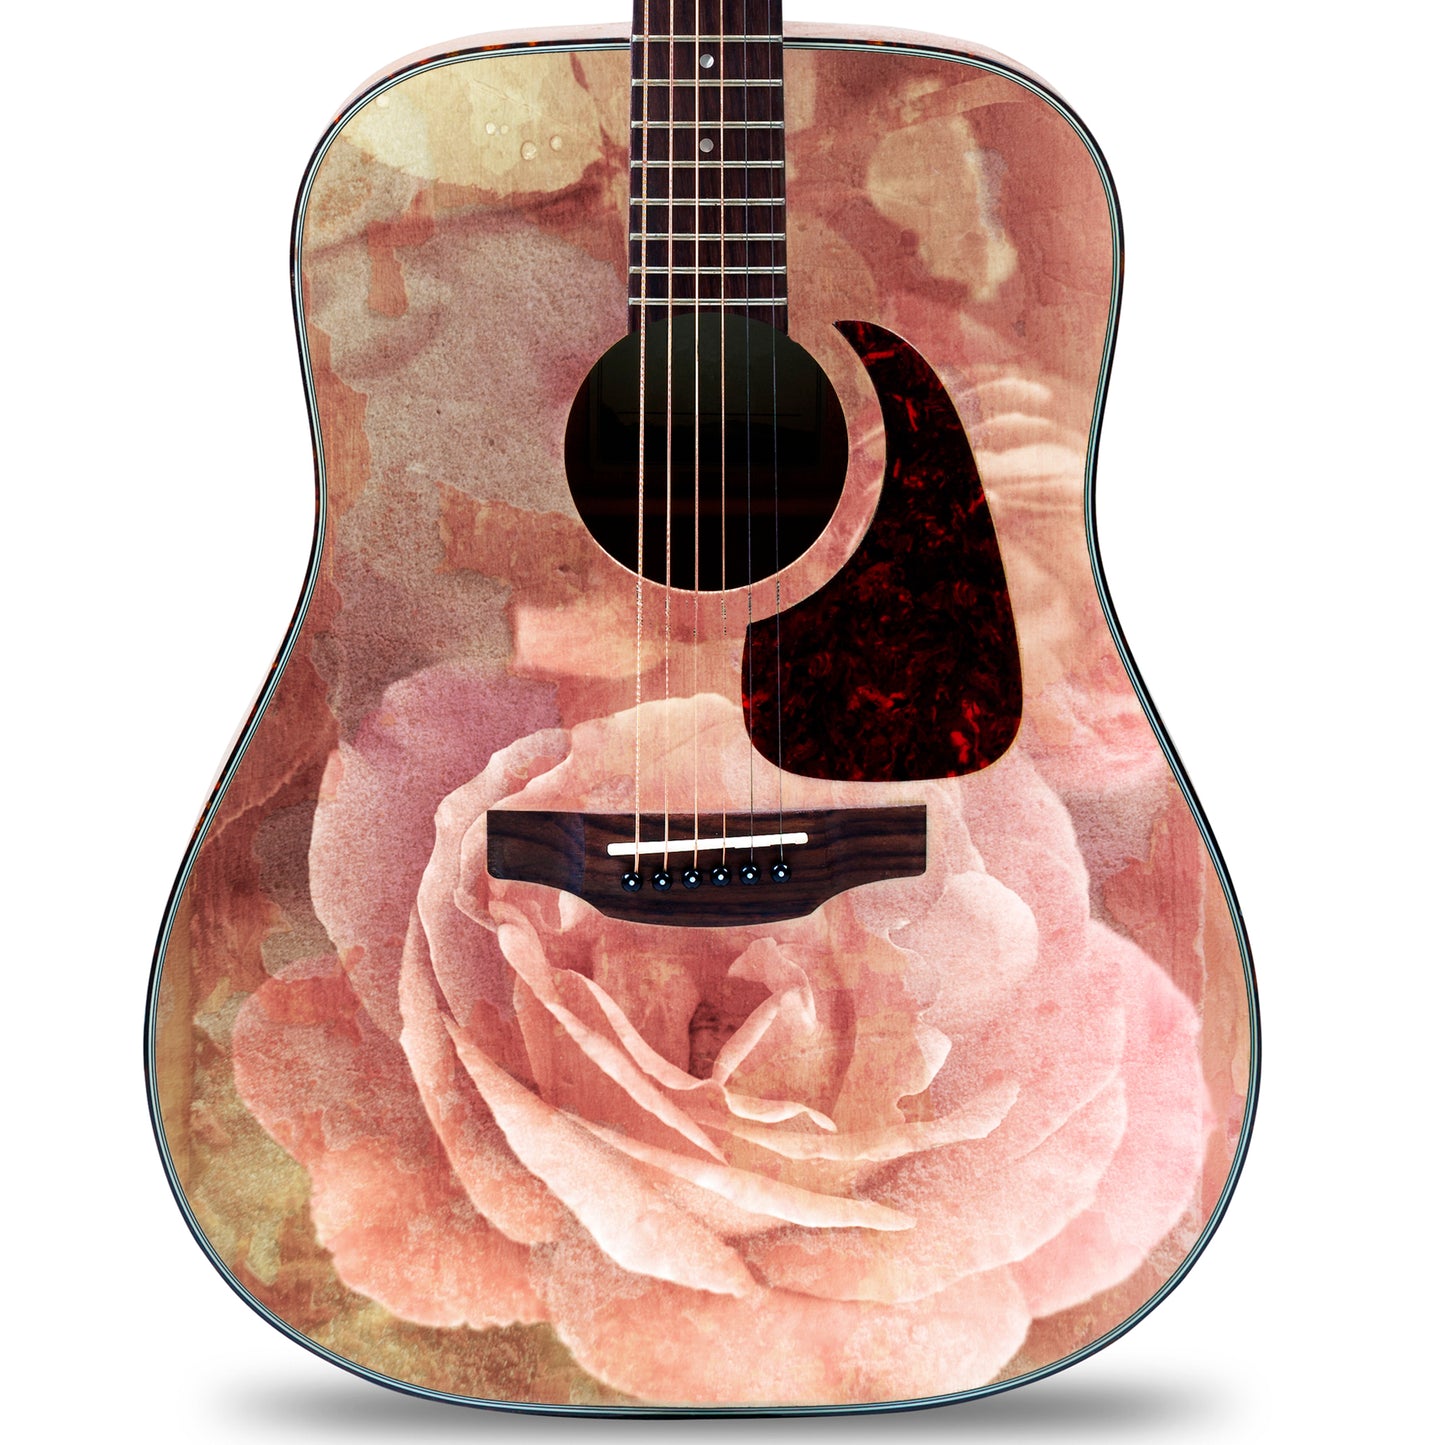 Acoustic/Electric Guitar Skin Wrap Vinyl Decal Sticker Vintage Rose GS173